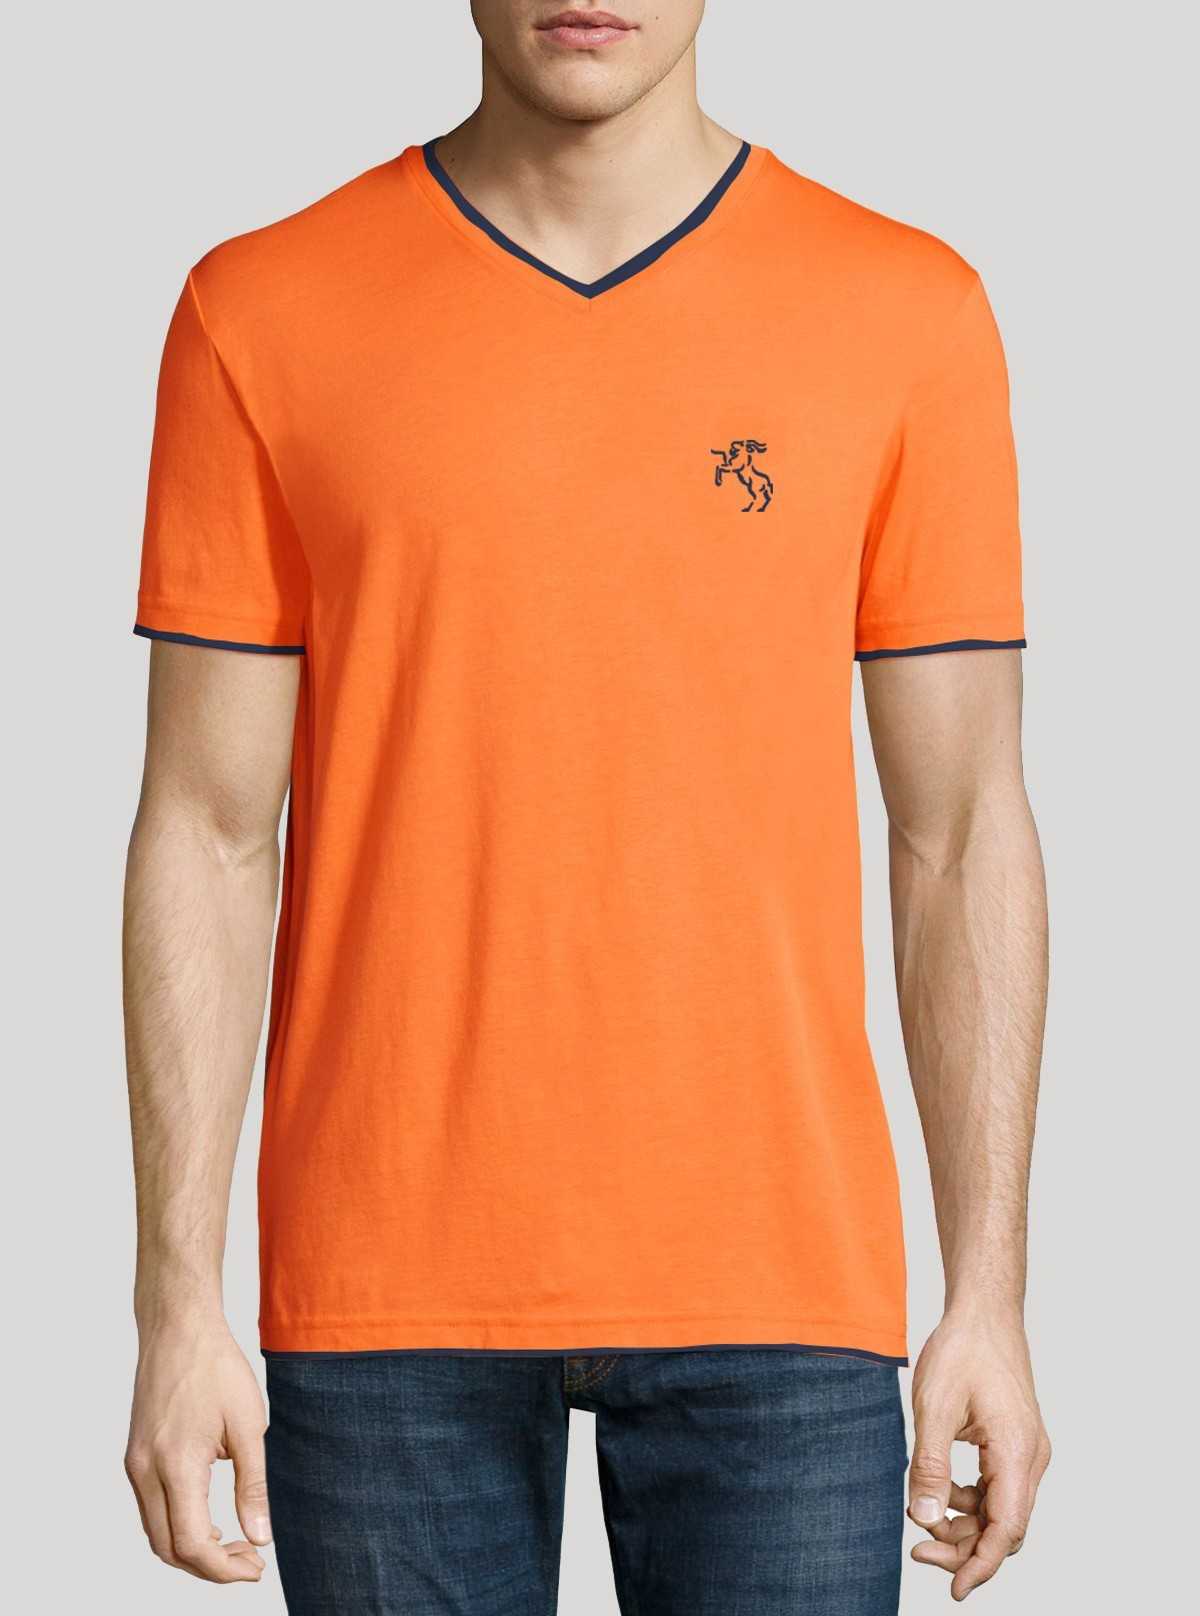 Orange V Neck Contrast Tshirt Boer and Fitch - 1